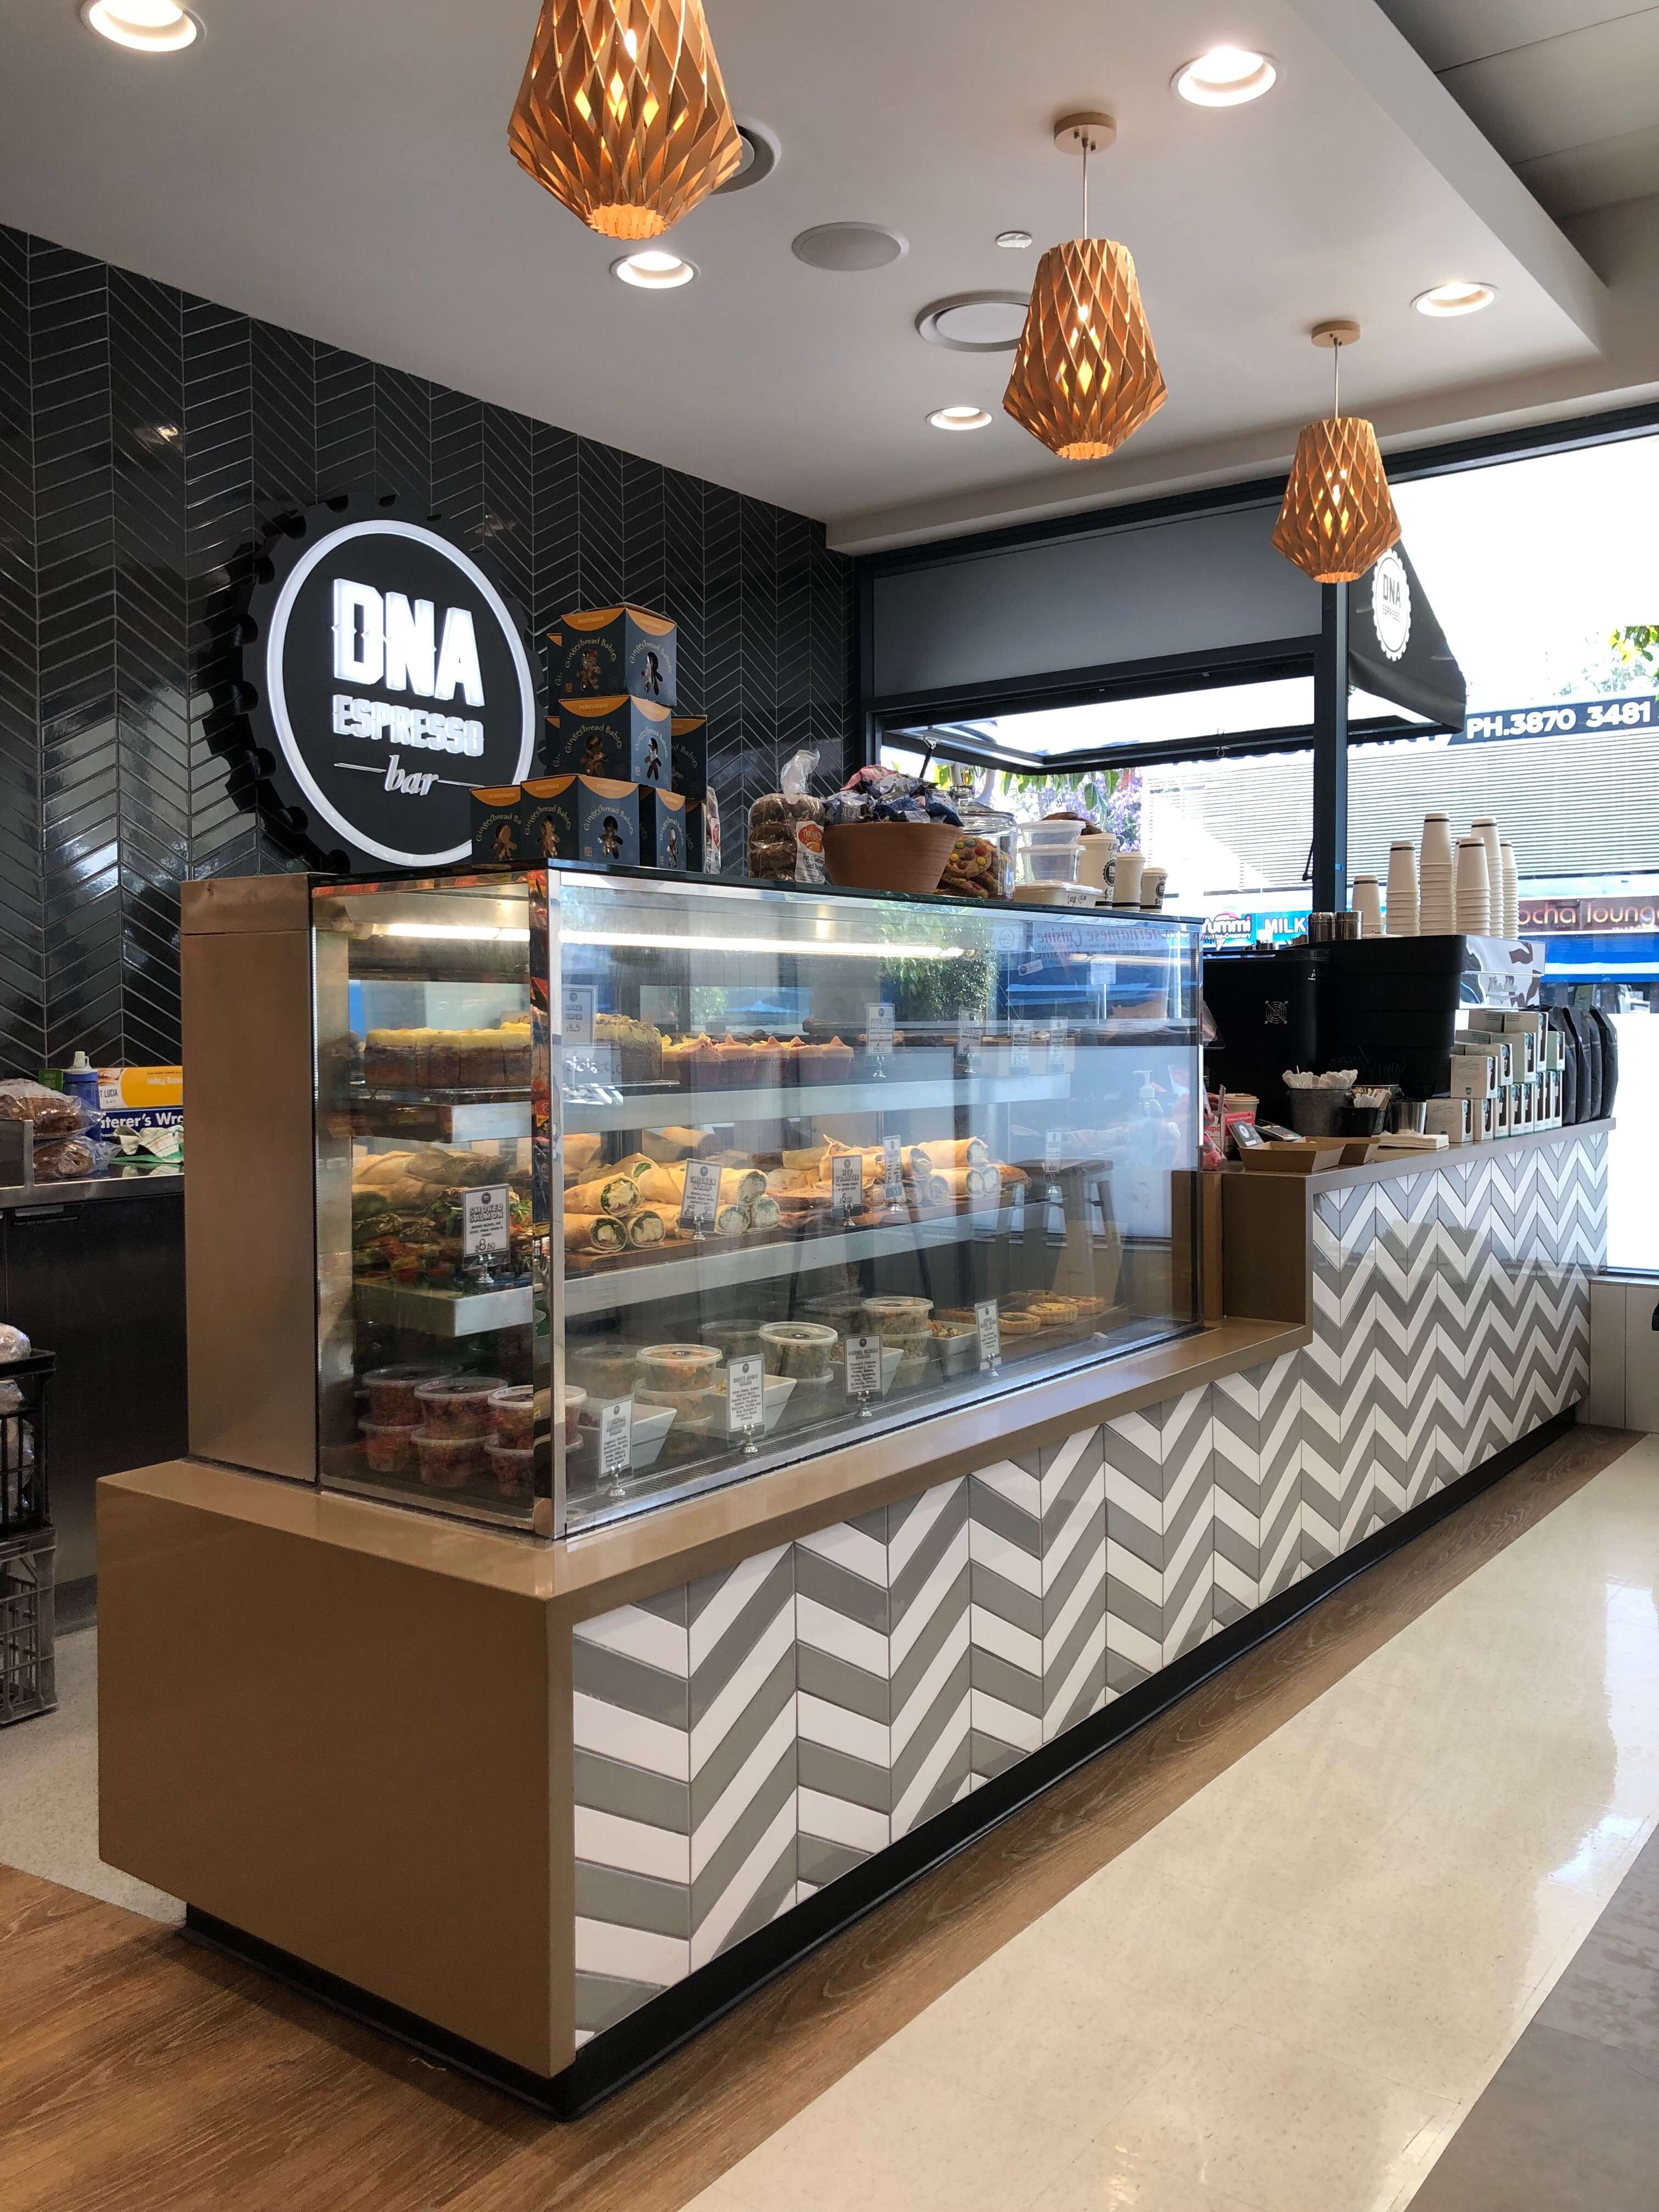 DNA Espresso Bar